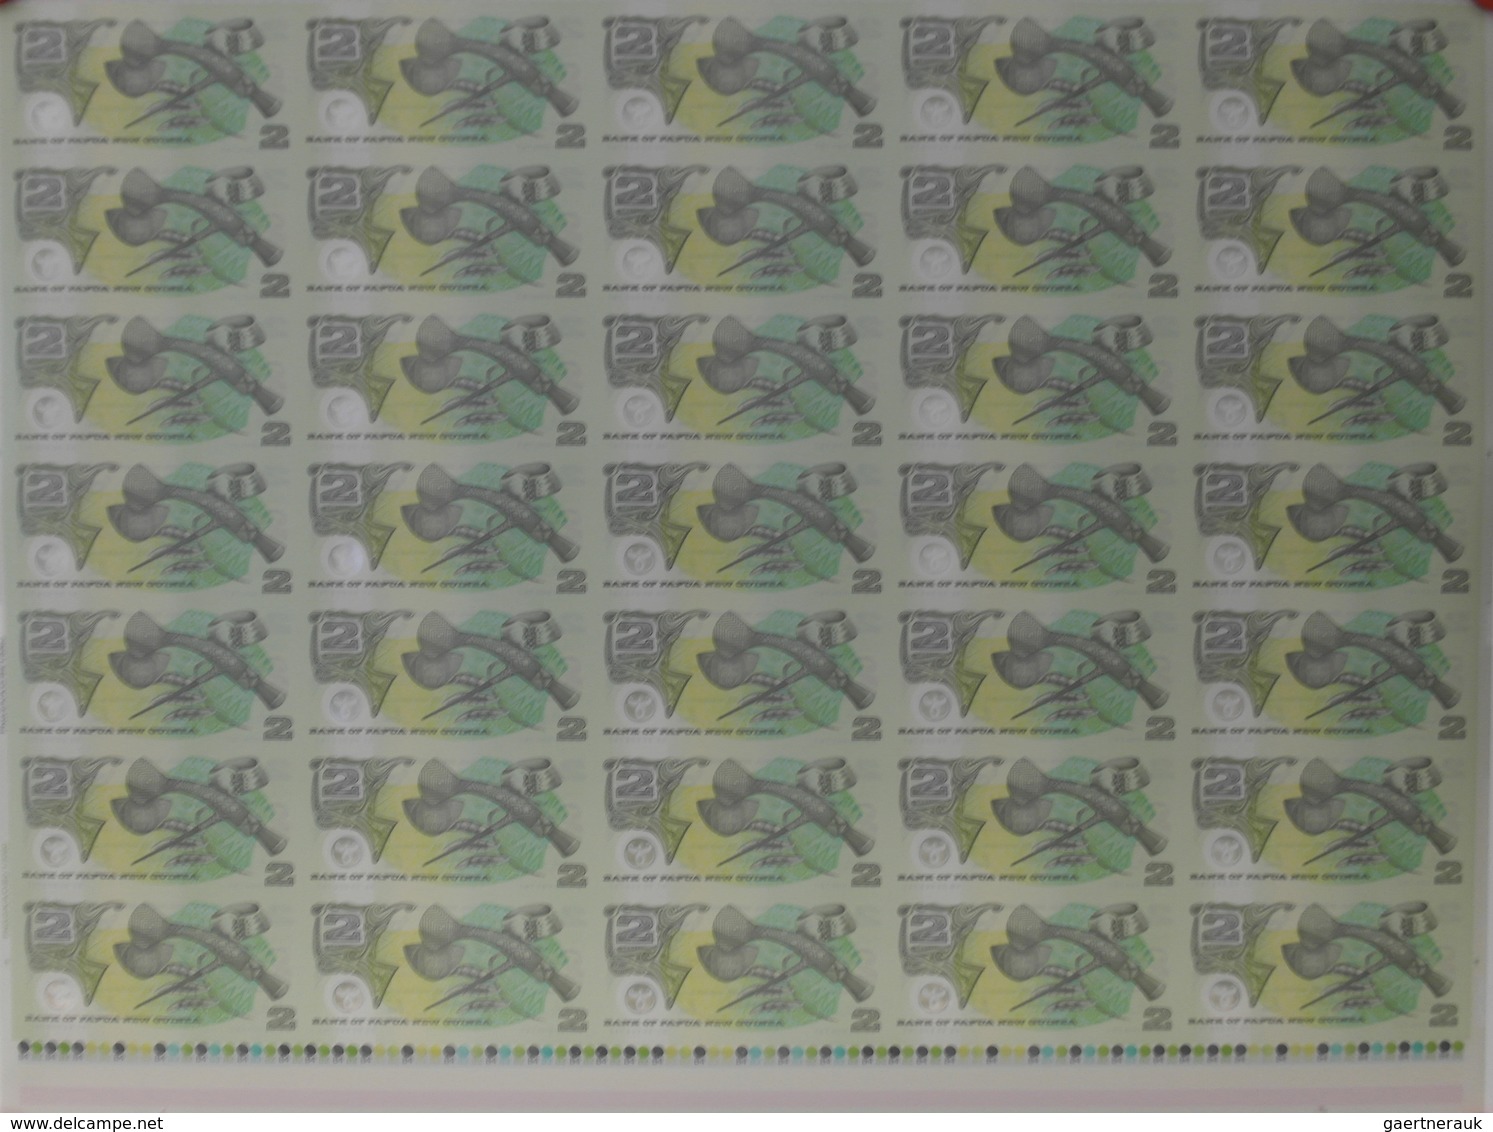 Papua New Guinea: Uncut Sheet Of 35 Pcs 2 Kina Commemorative "25th Anniversary" ND(2000) P. 23 In Co - Papua New Guinea